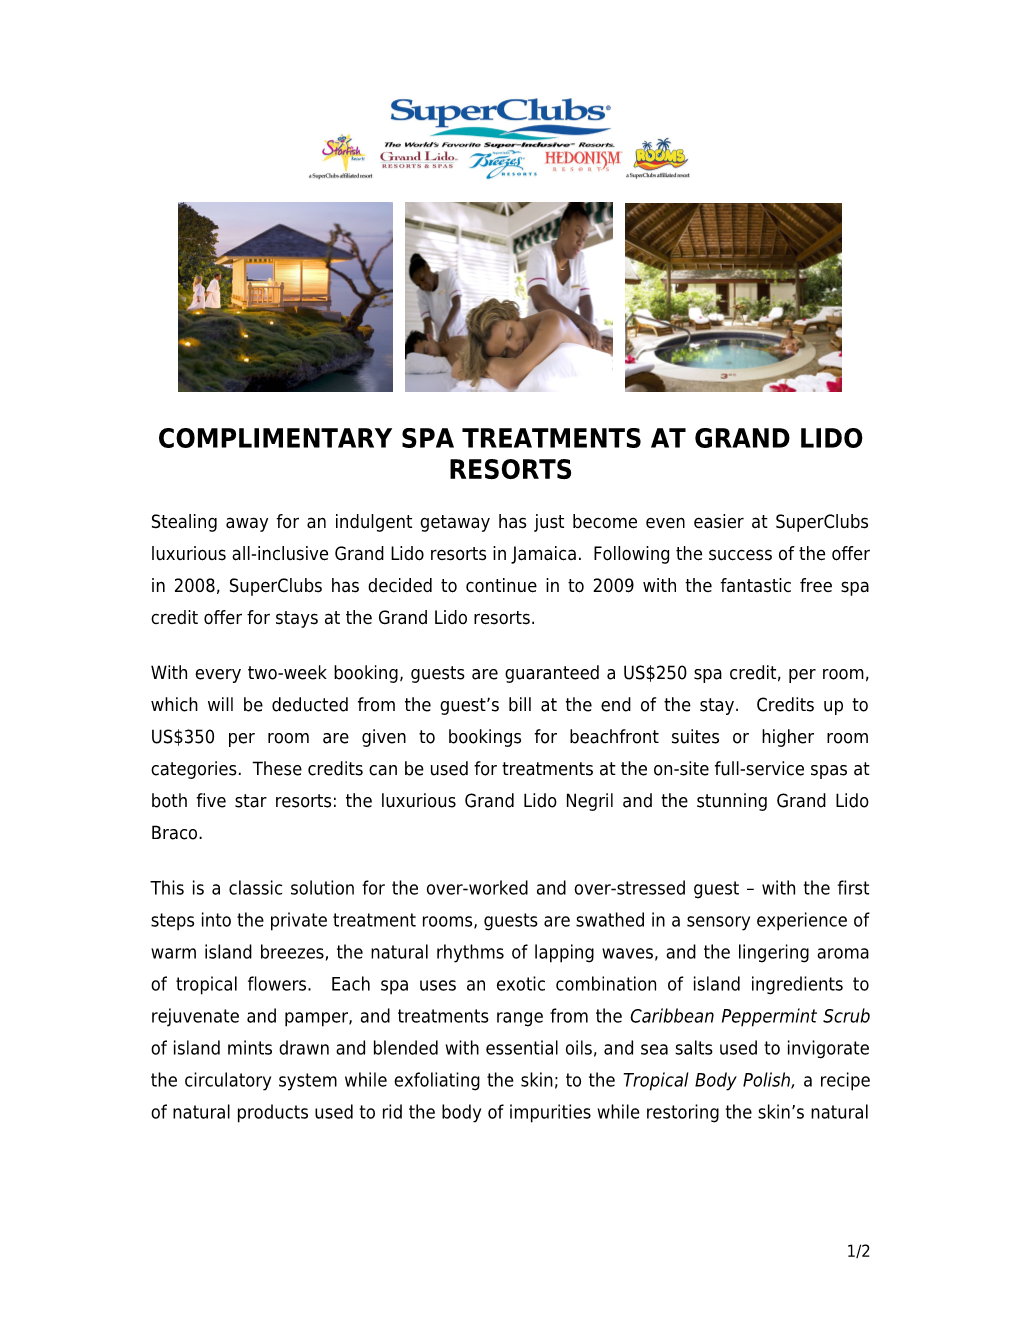 Complimentary Spa Treatments at Grand Lido Resorts